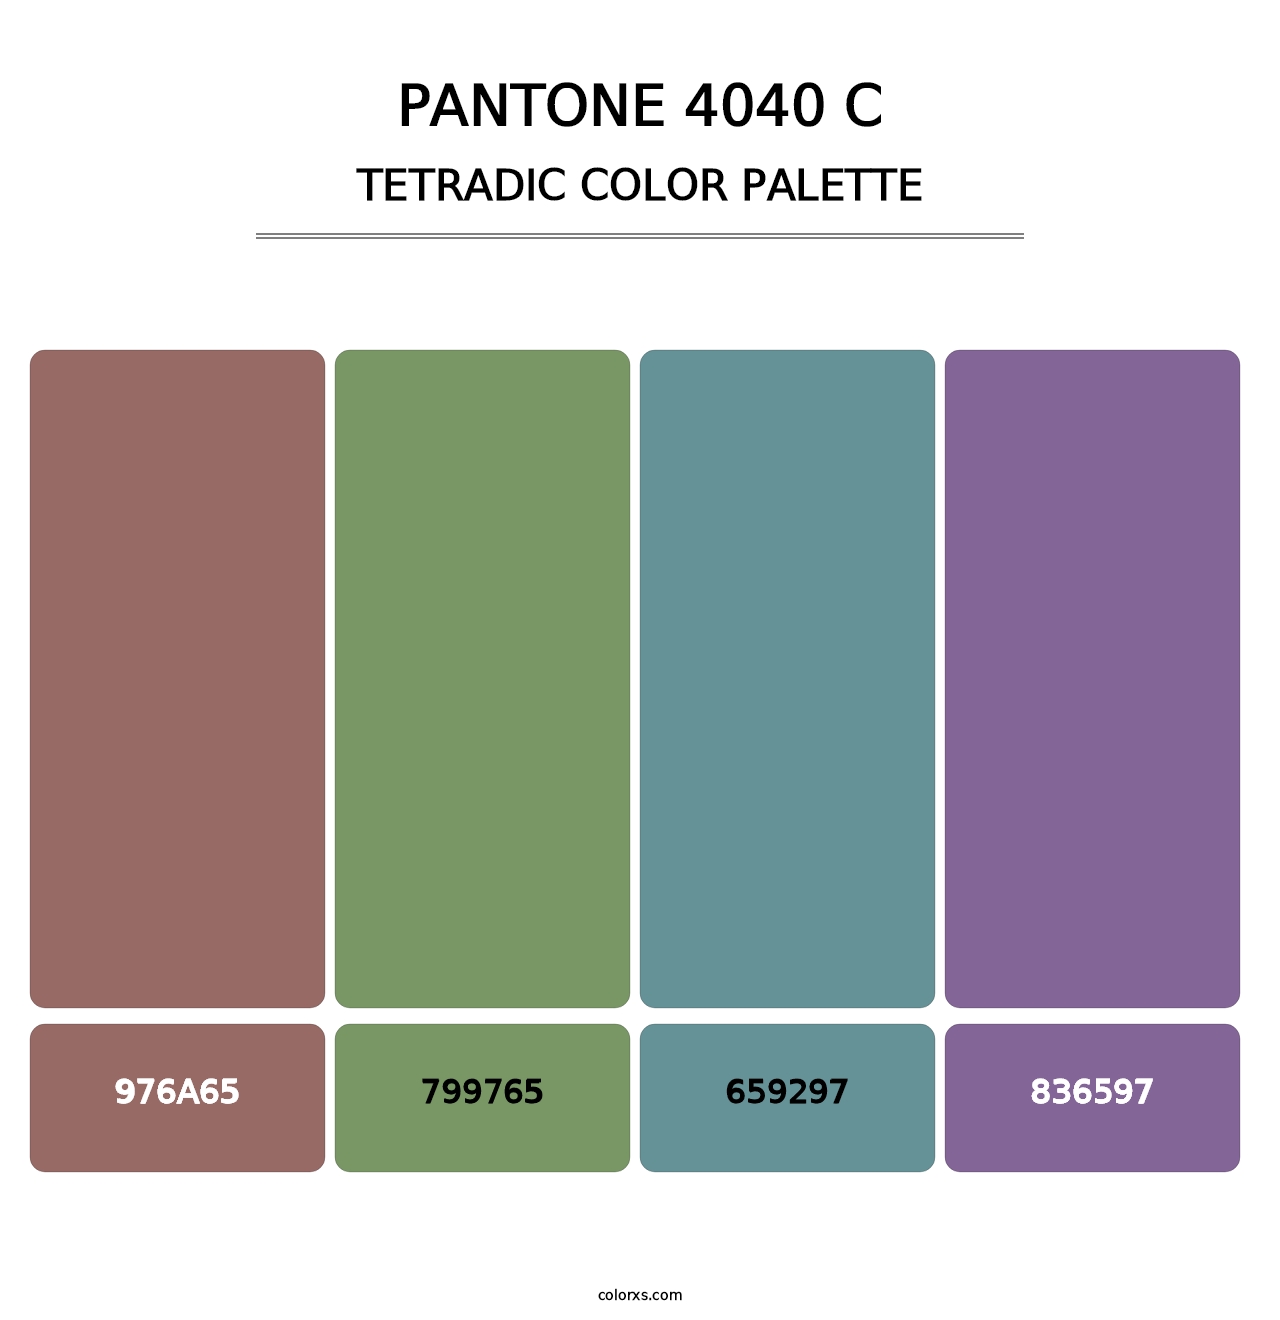 PANTONE 4040 C - Tetradic Color Palette